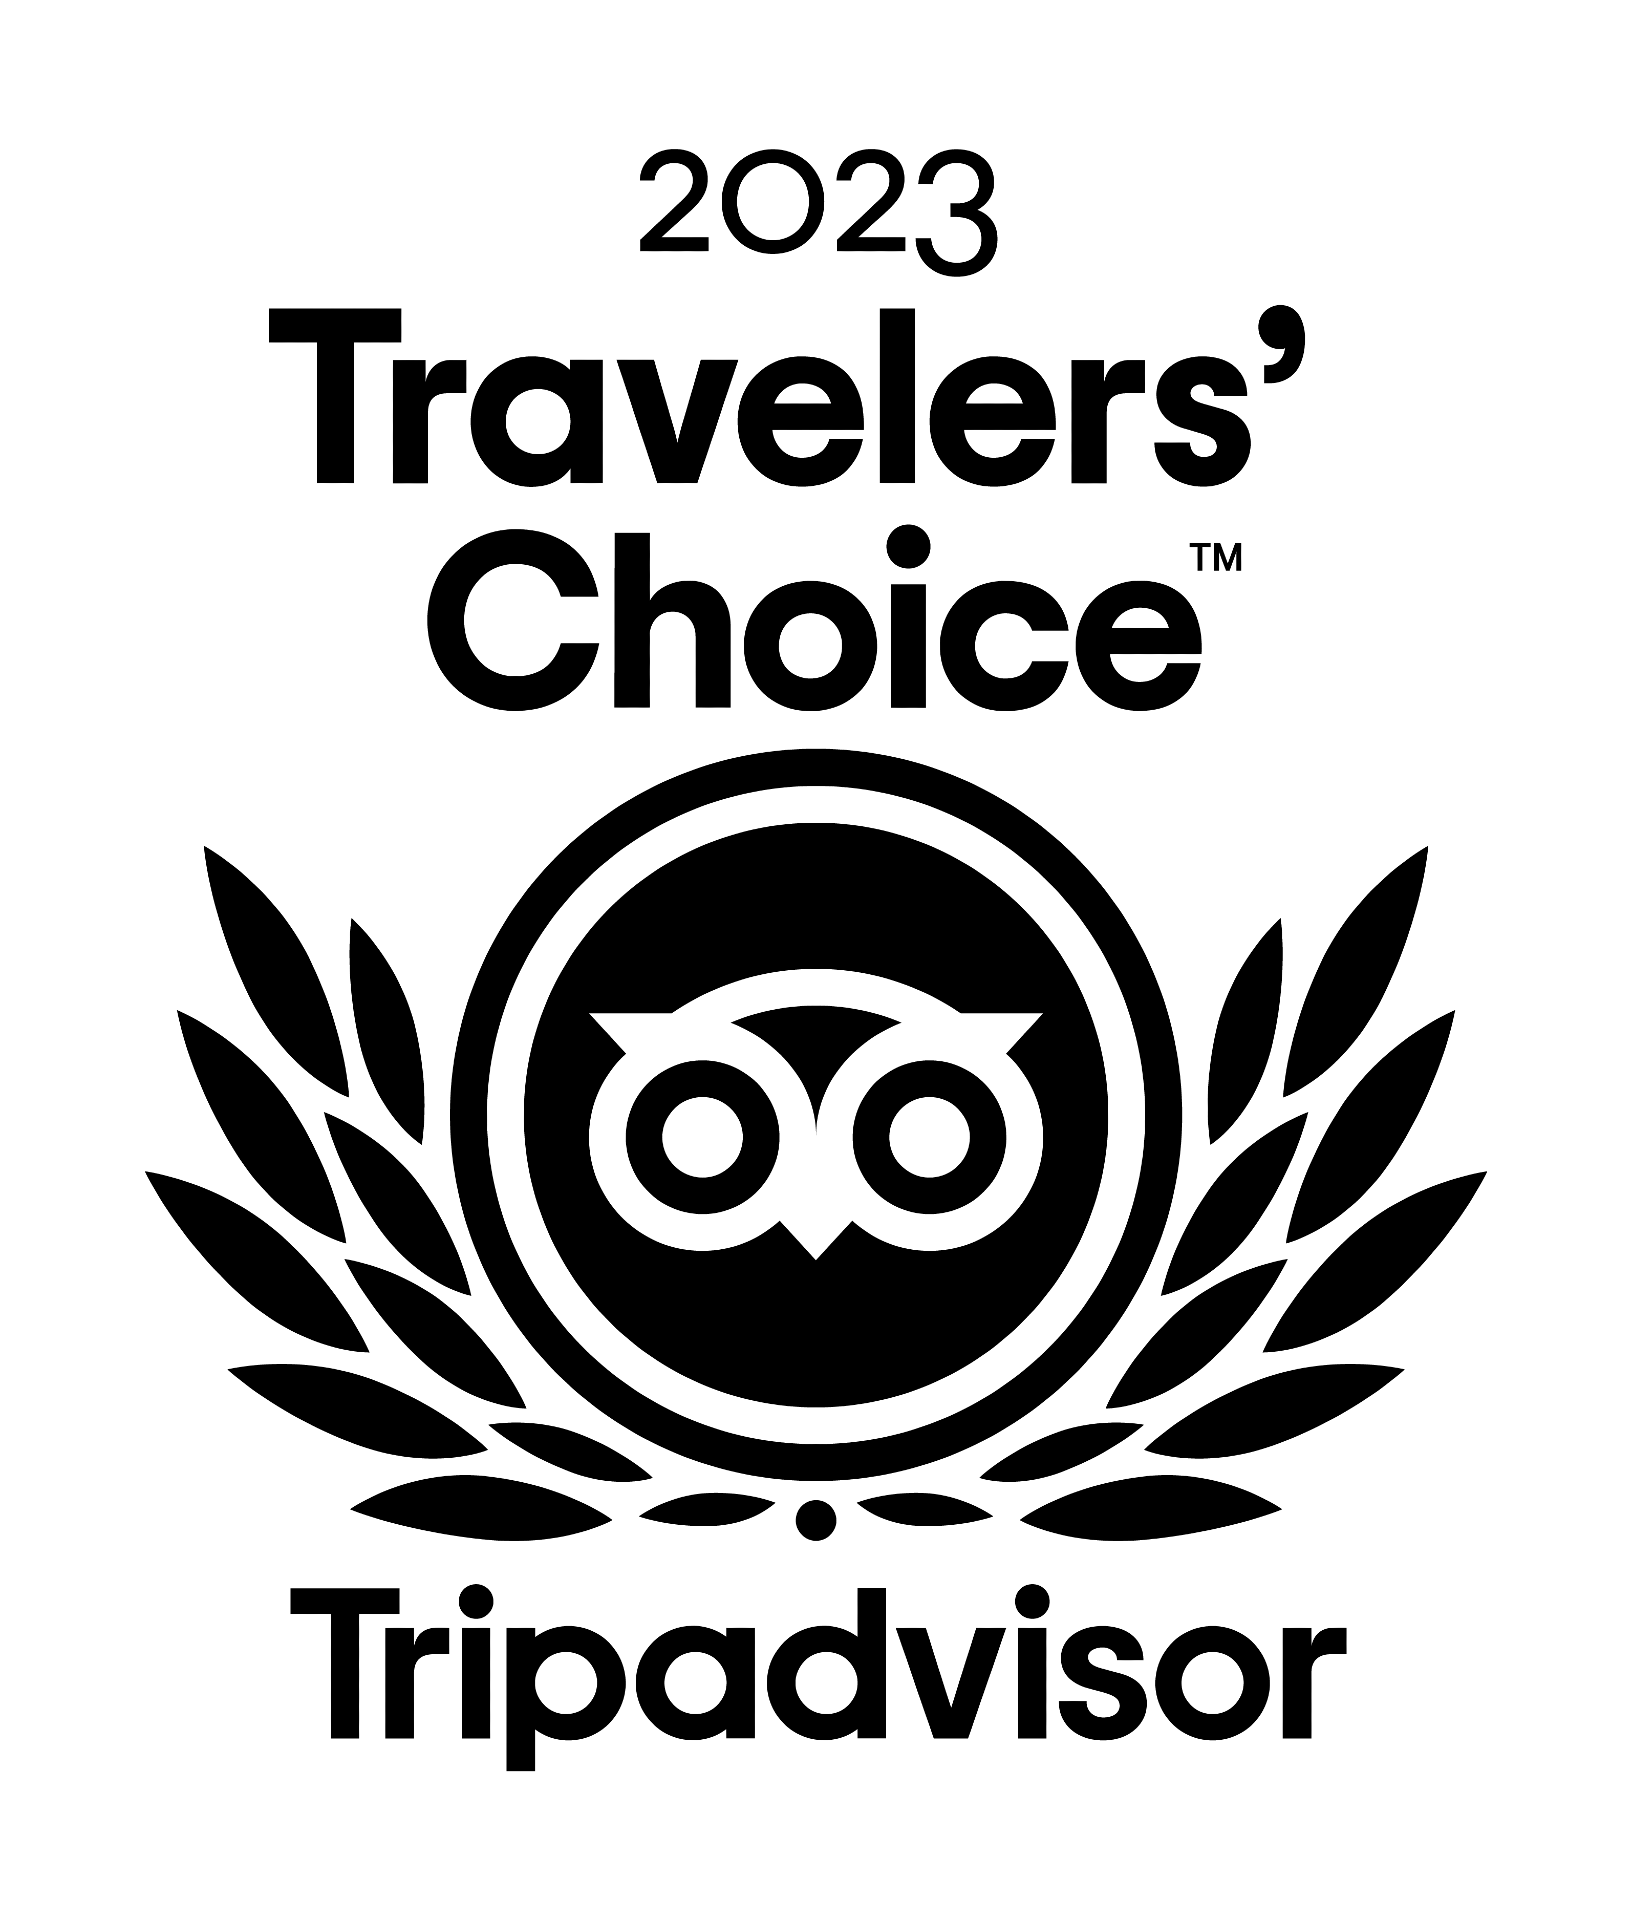 Reader's choice logo